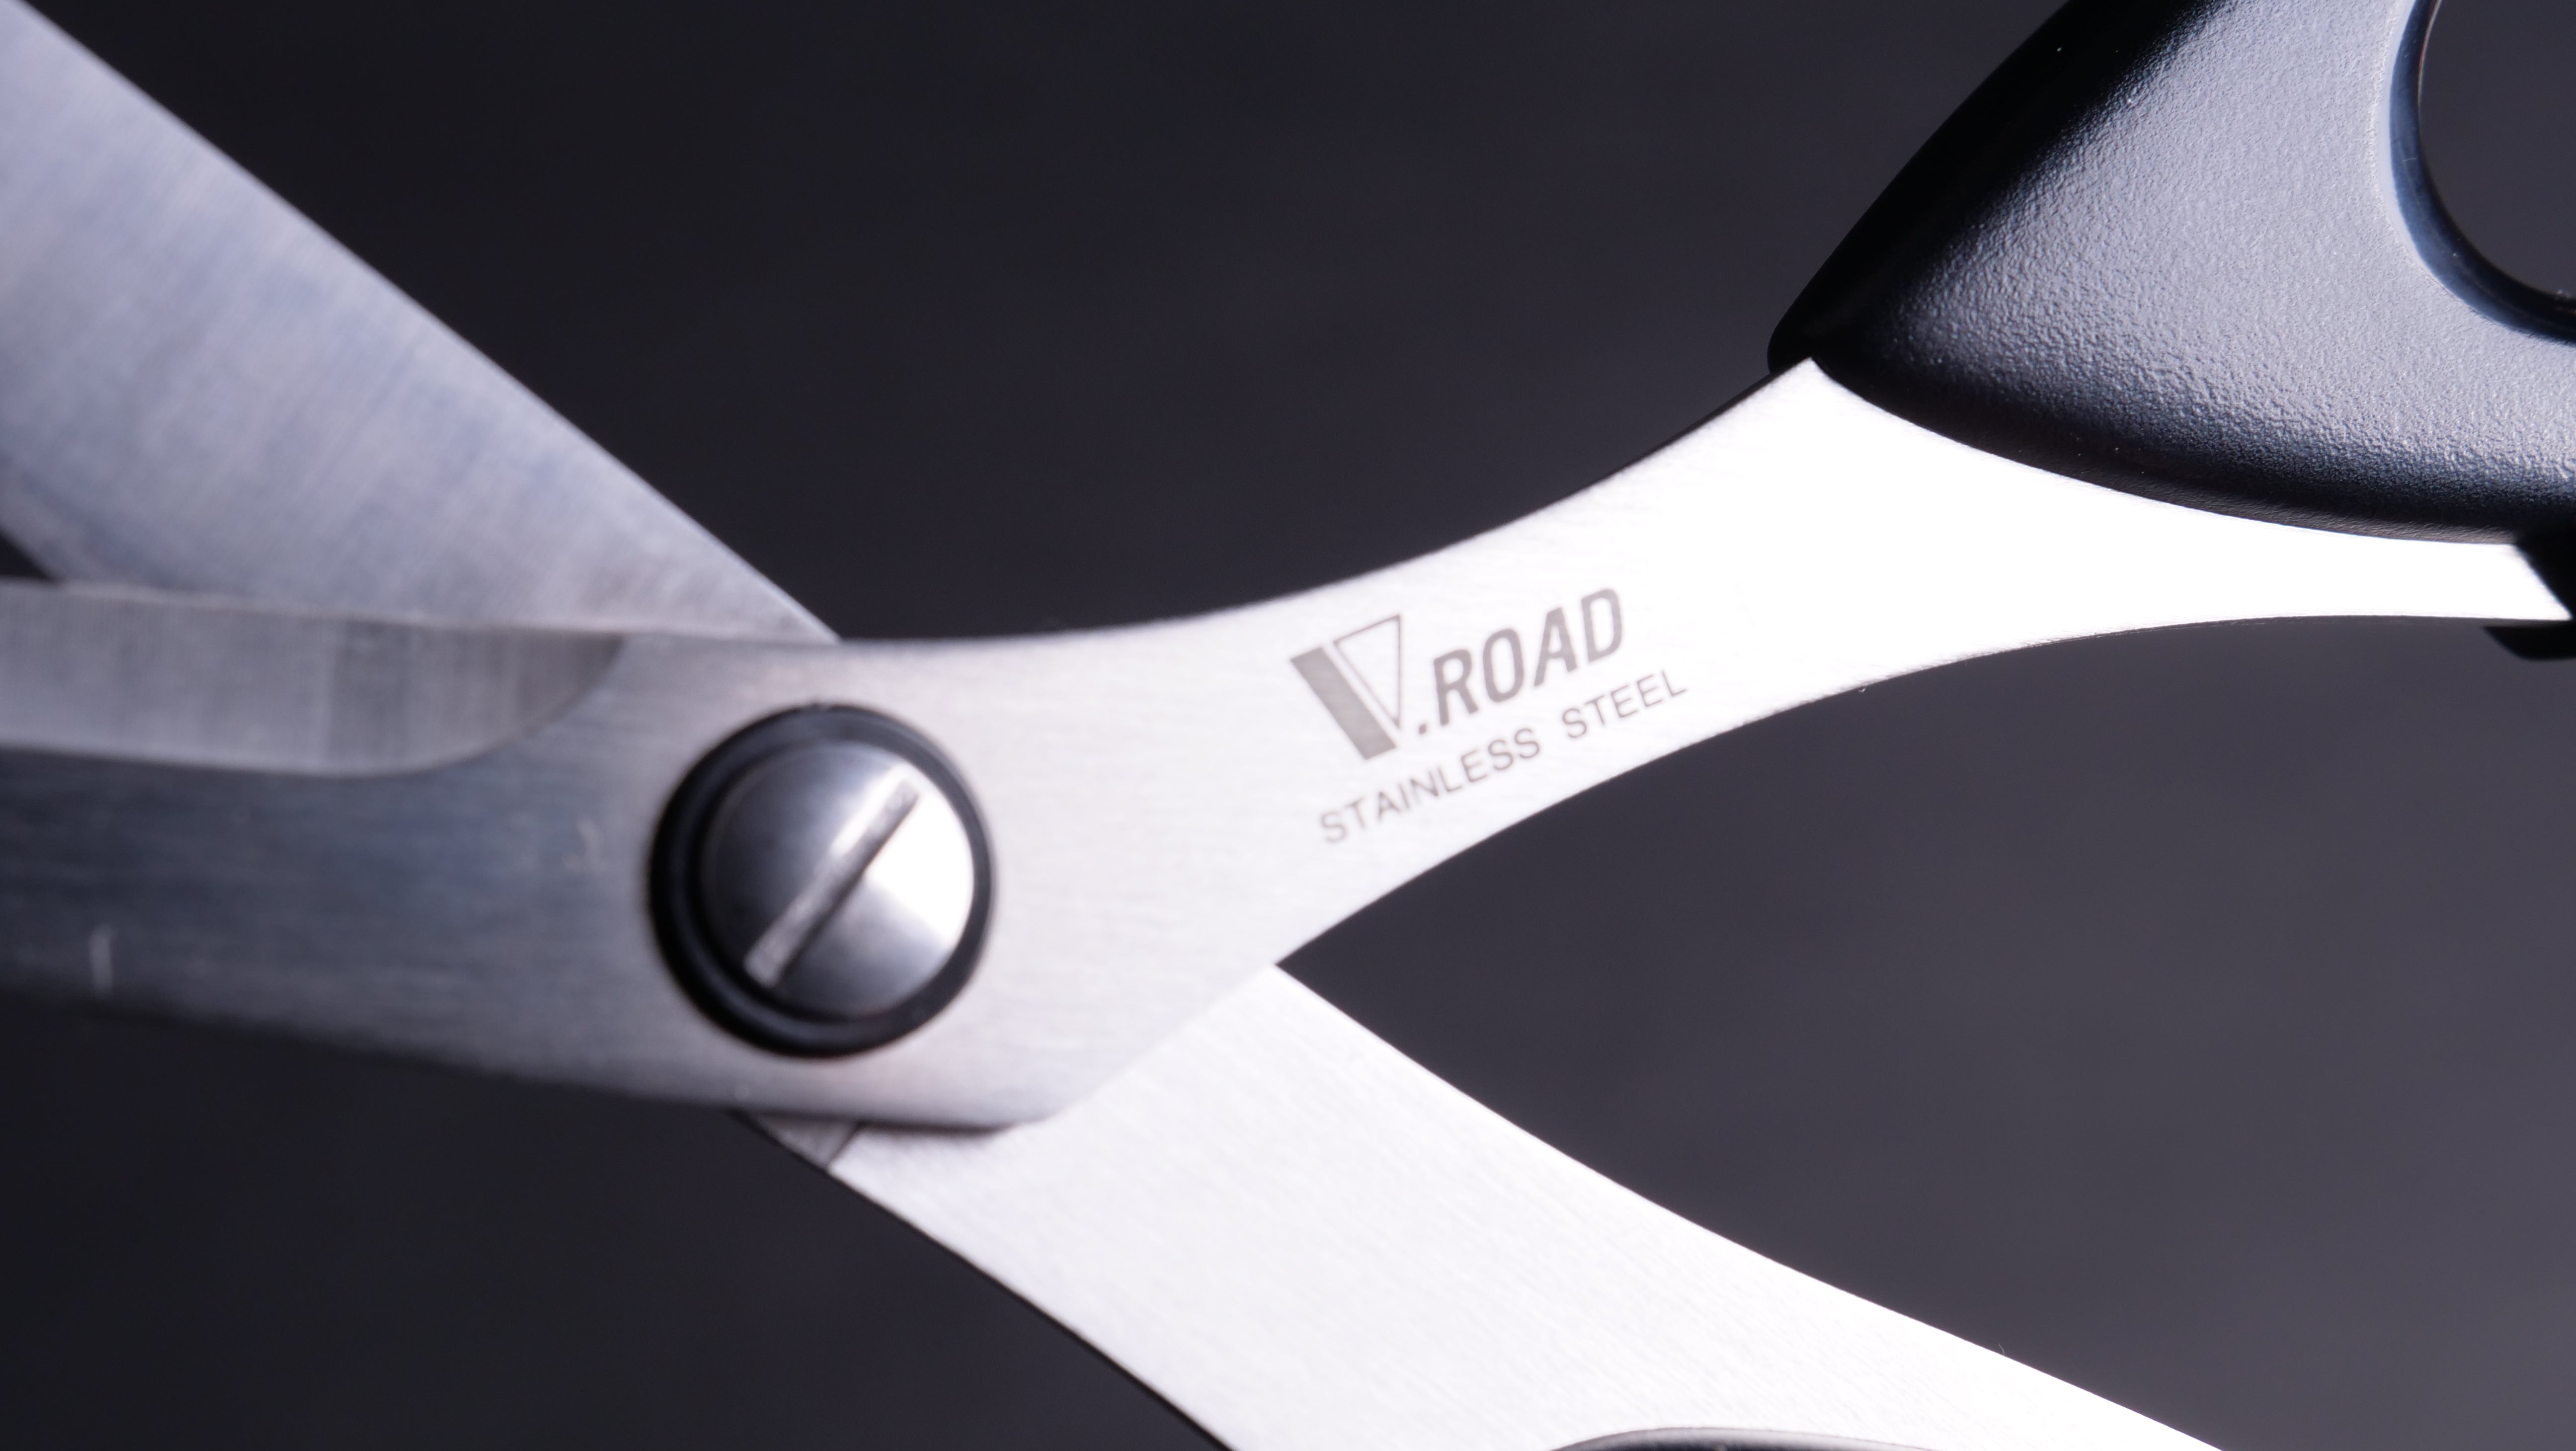 V.Road Sewing Scissors RM-185N